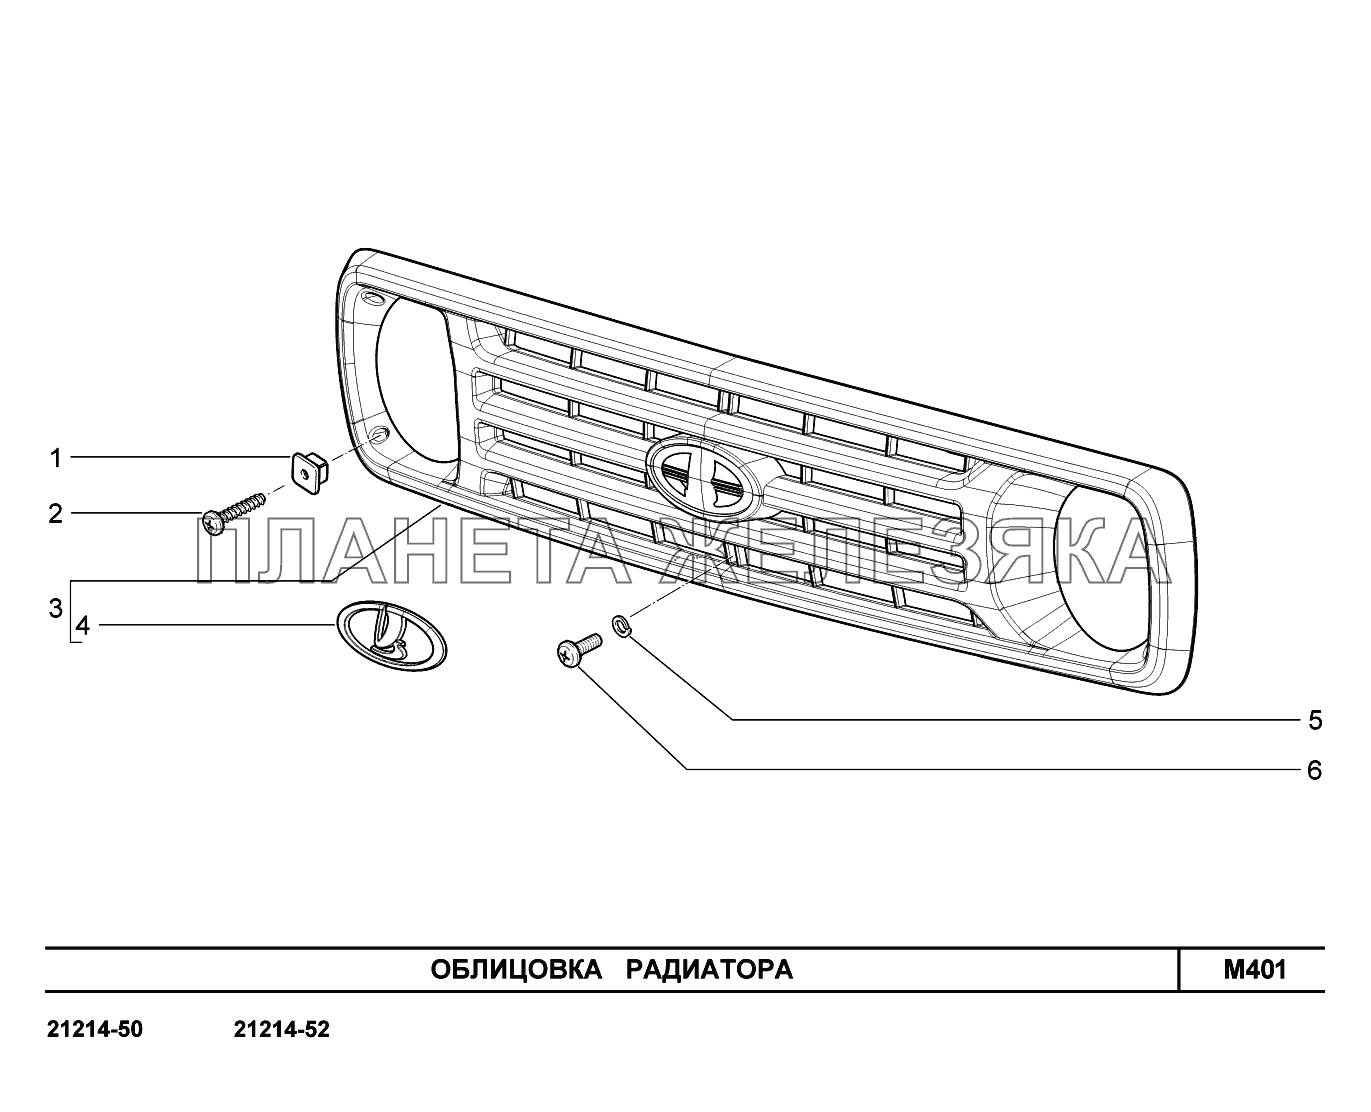 M401. Облицовка радиатора Lada 4x4 Urban